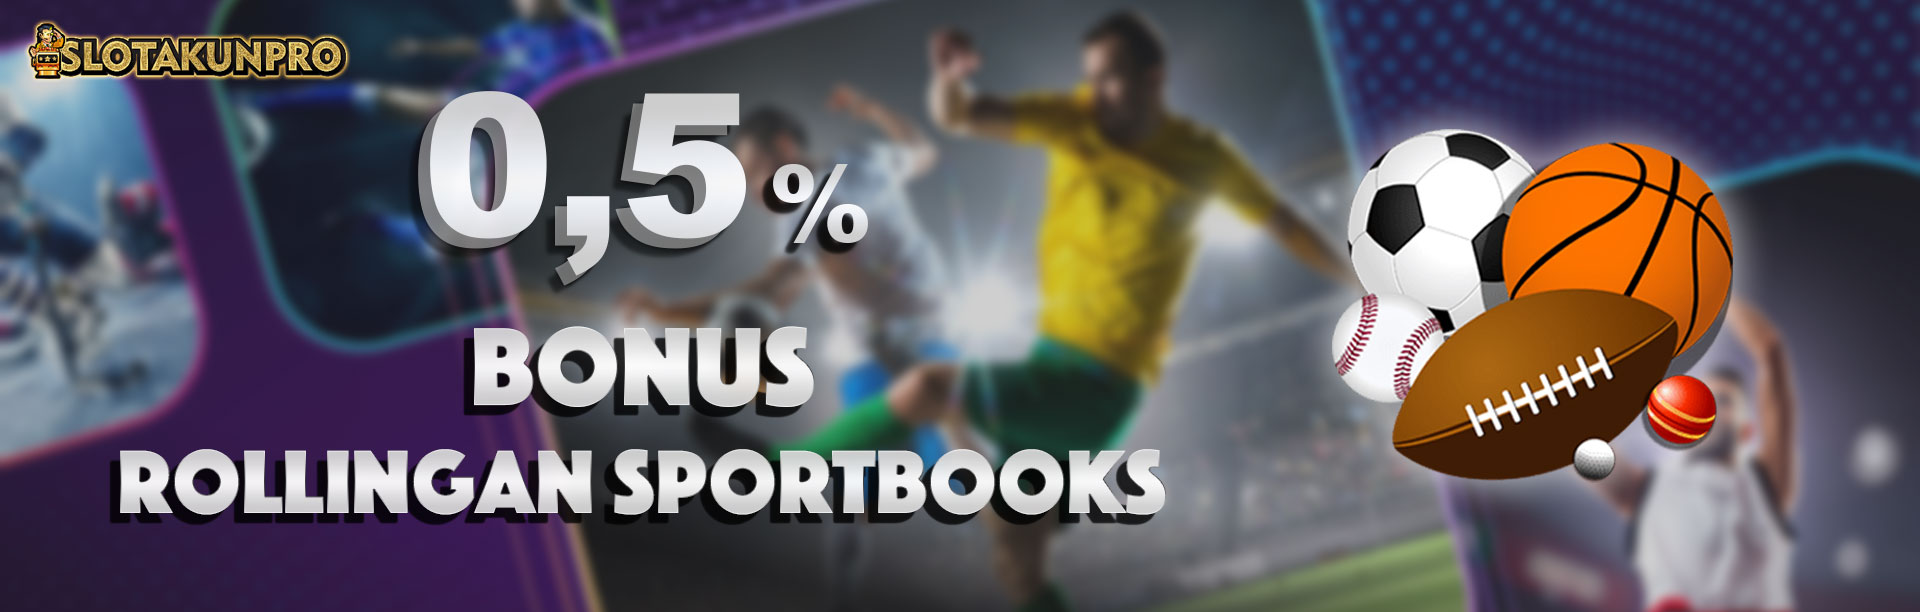 Bonus Rollingan Sportbooks